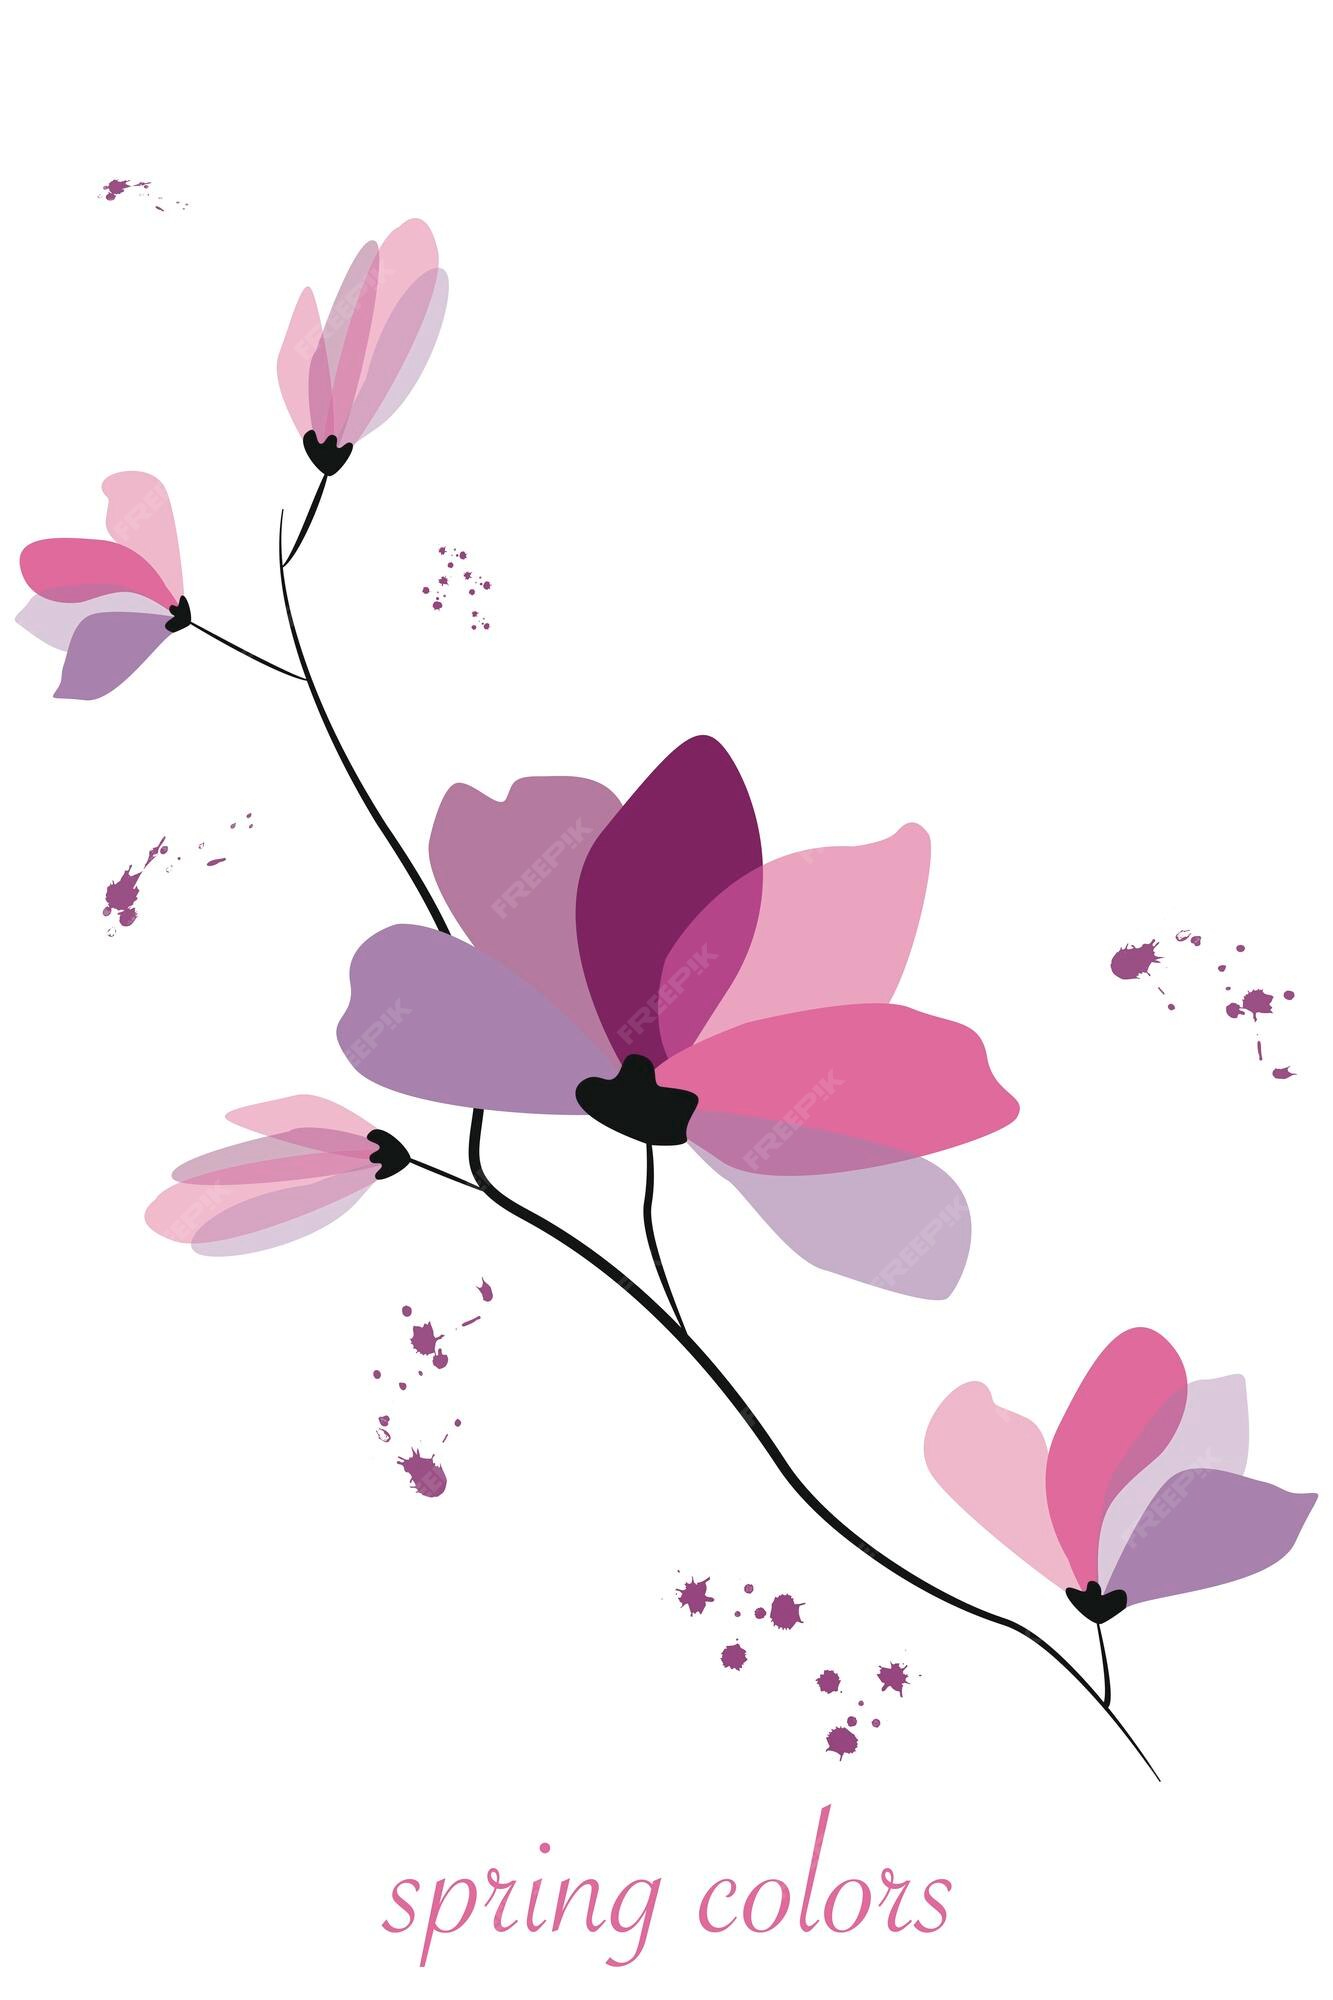 Flores de primavera. perfecto como invitación, cuaderno o portada de libro,  postal o diseño de protector de pantalla. | Vector Premium